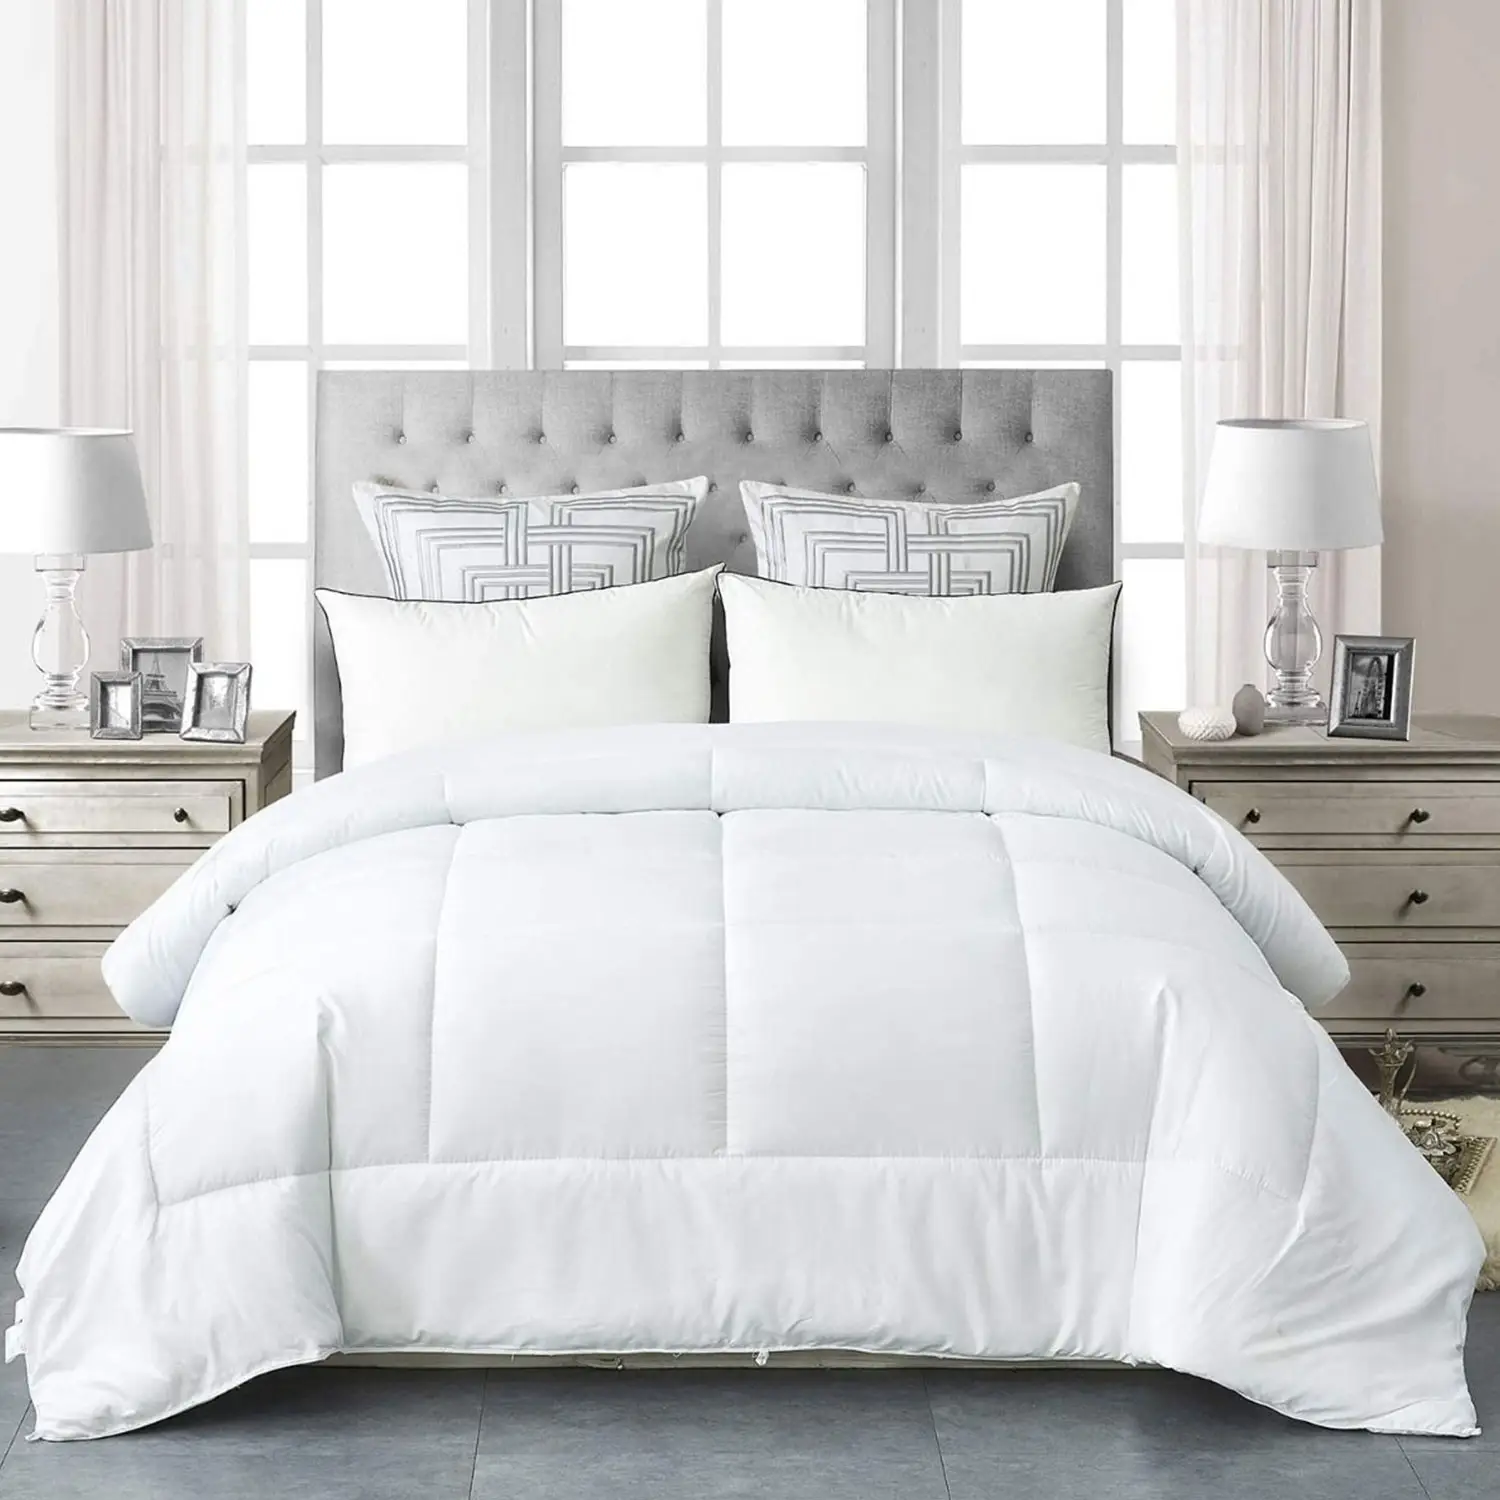 HAOK Comforter Duvet Insert - Box-Stitched Bed Comforter, 8 Corner Tabs 350GSM 